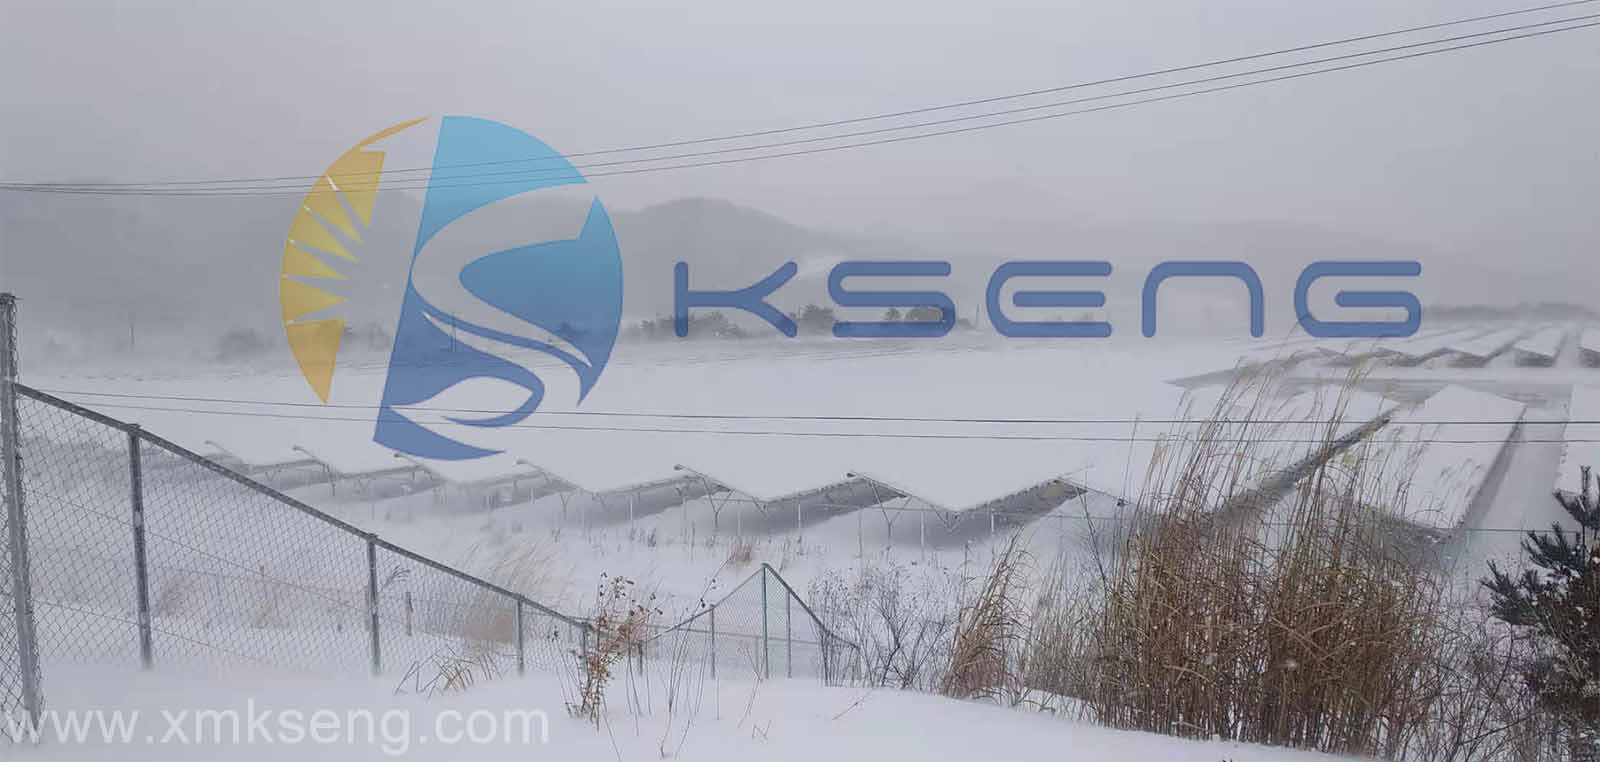 佤邦s ist der Aufprall starker Schnee auf Sonnenkollektor-Montagehalterung